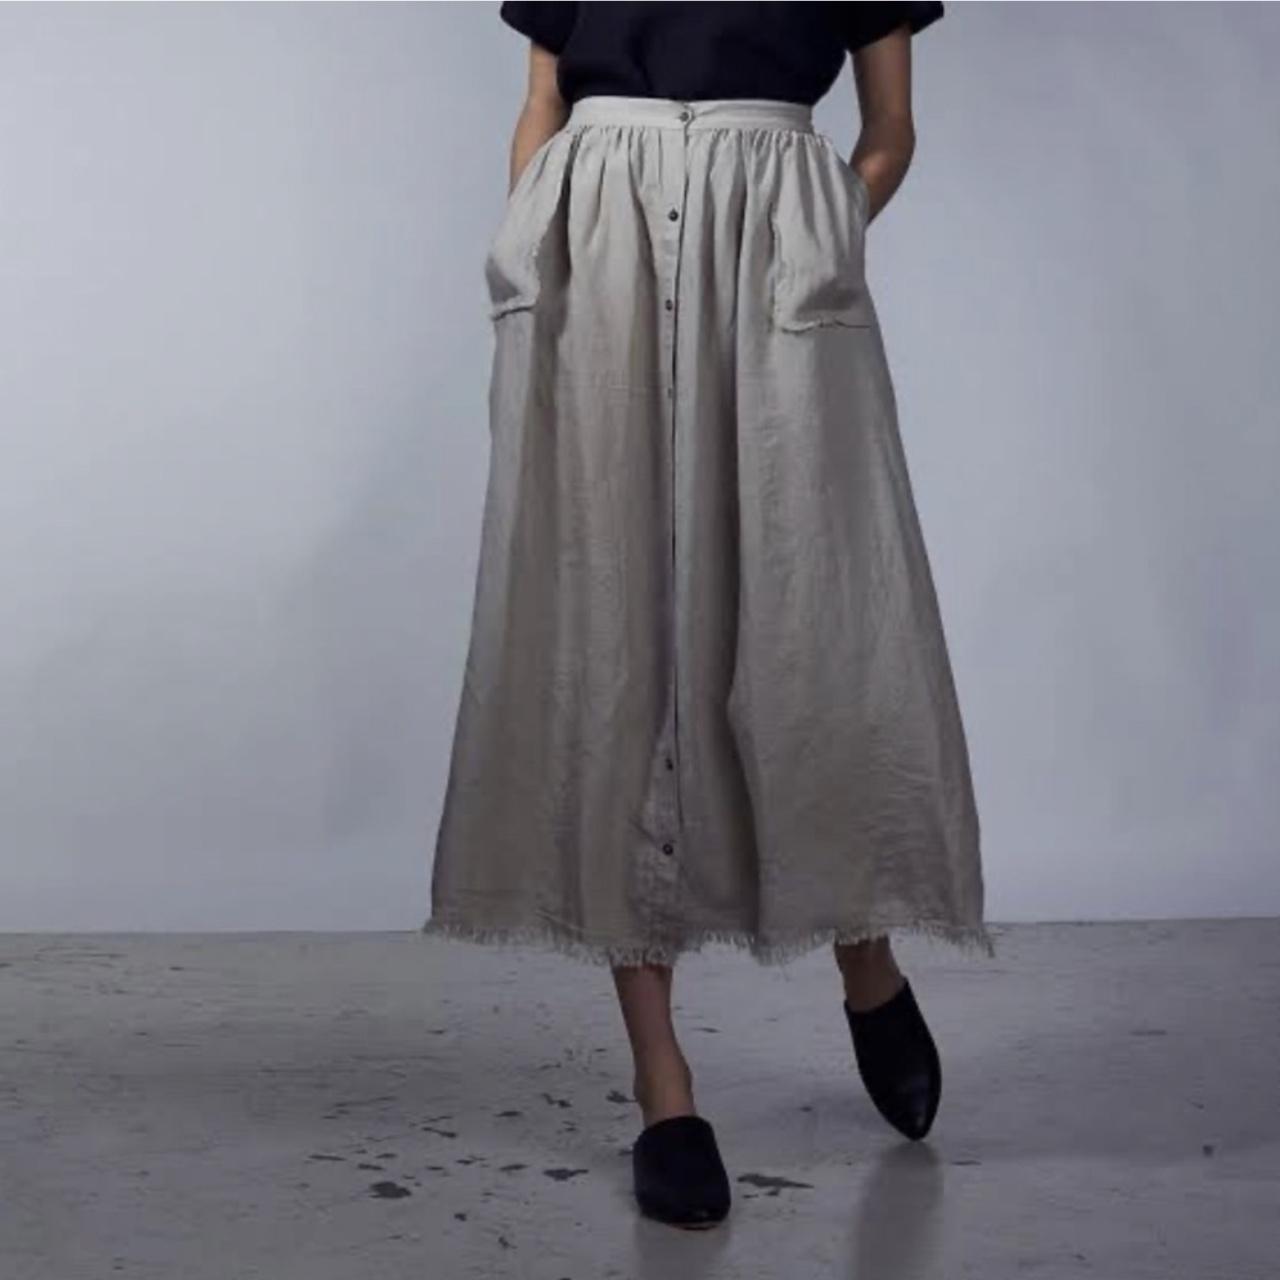 Feather Drum ‘The Florence’ linen midi skirt sz XS.... - Depop